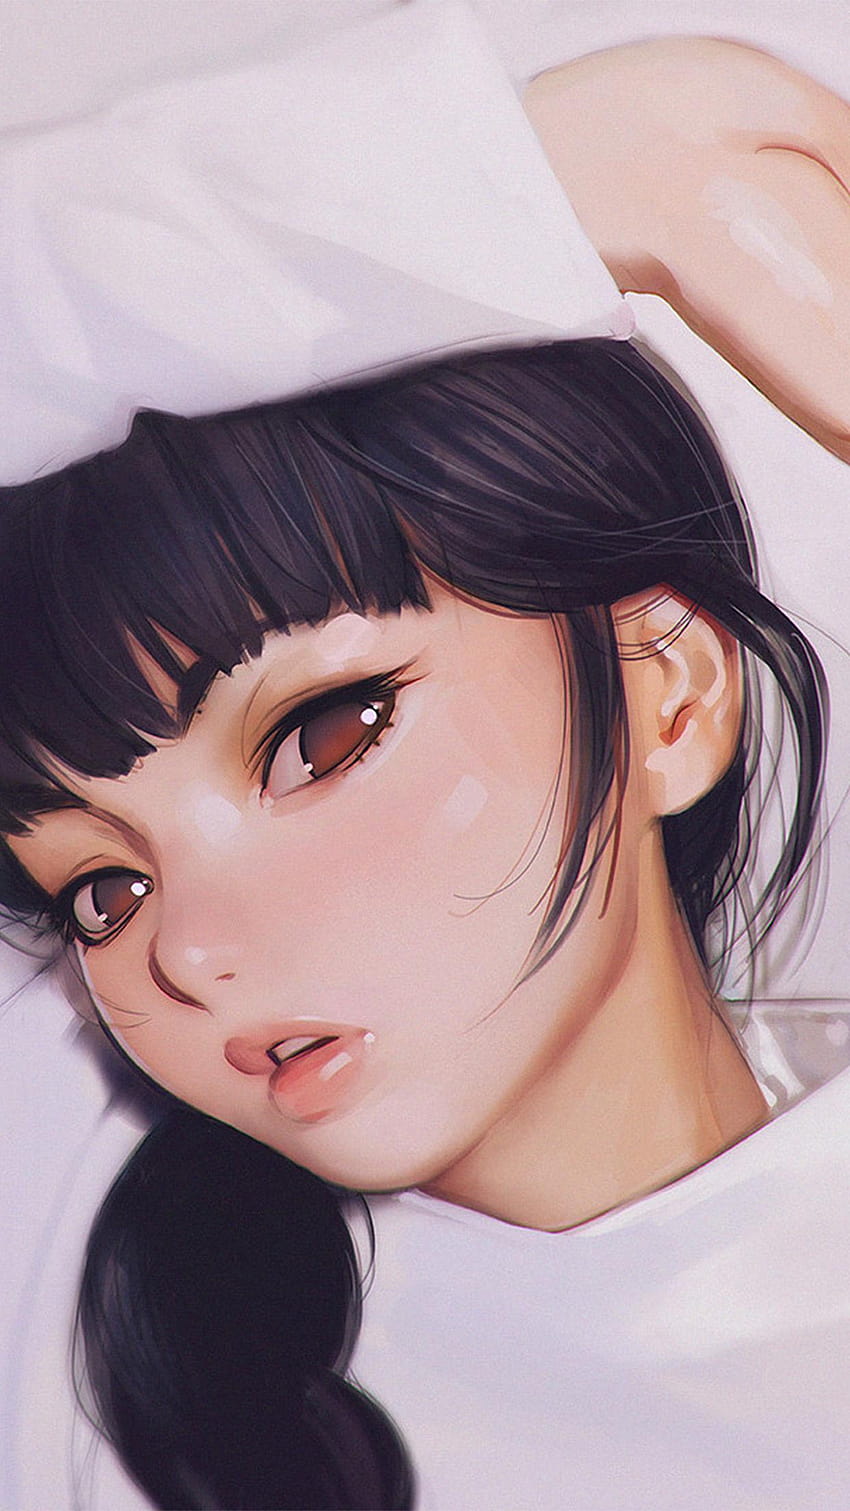 Anime Girl Digital Art Wallpaper 4k Ultra HD ID:9790